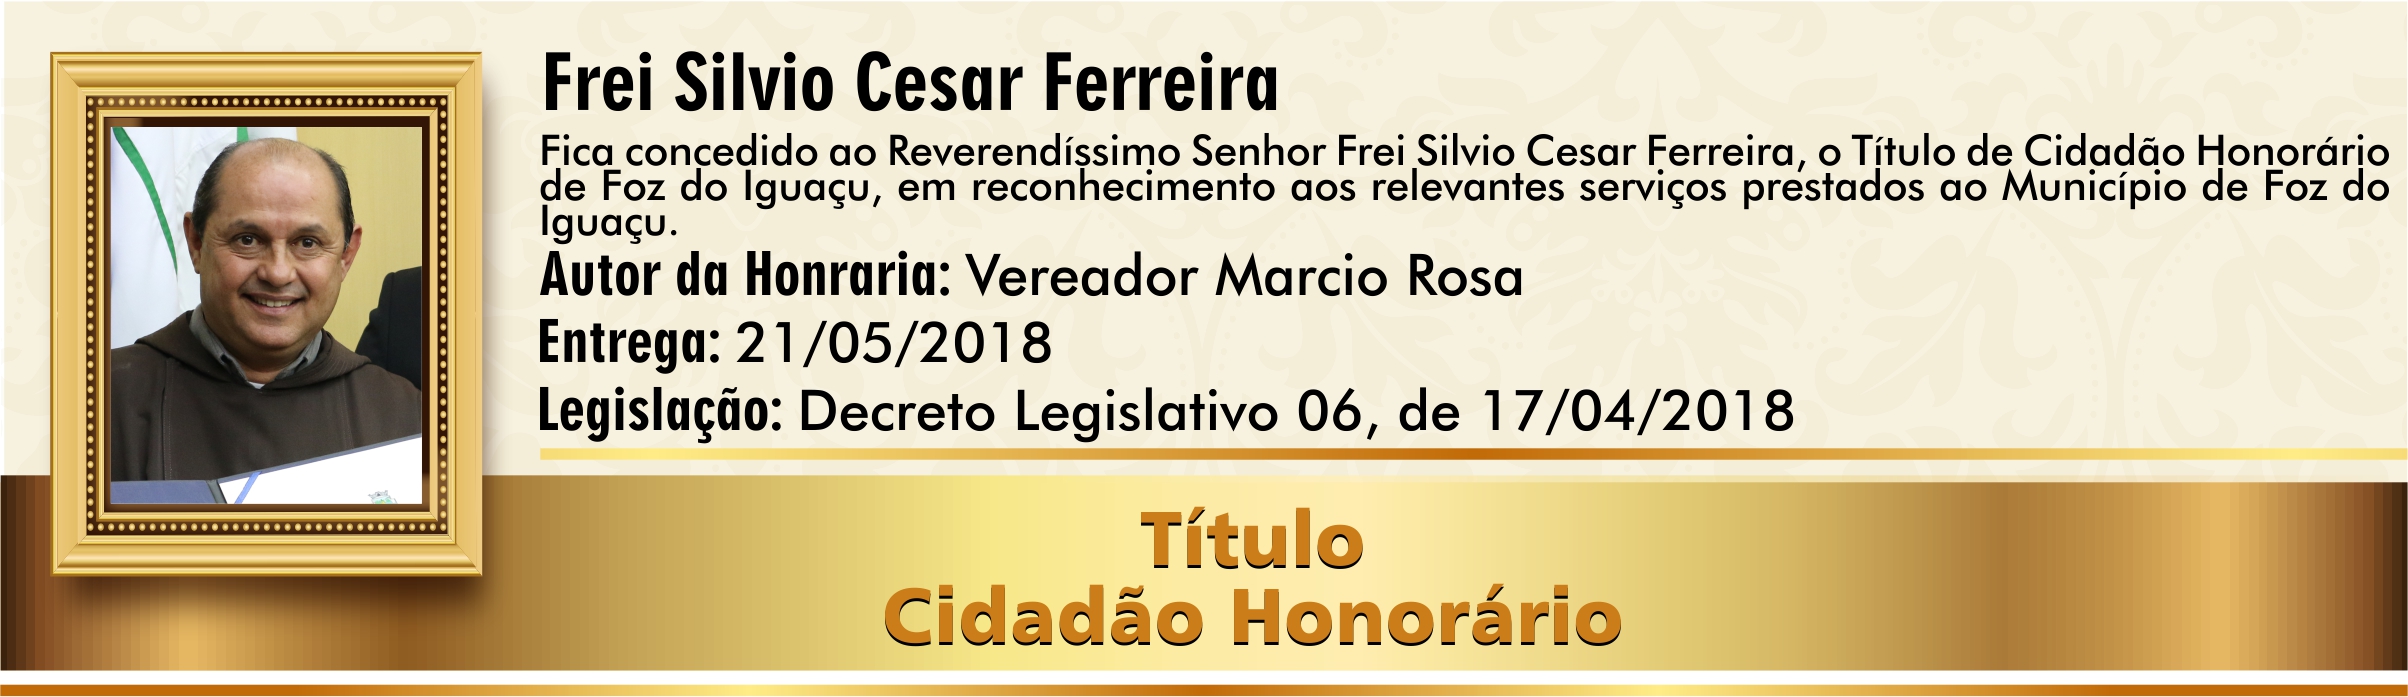 Frei Silvio Cesar Ferreira